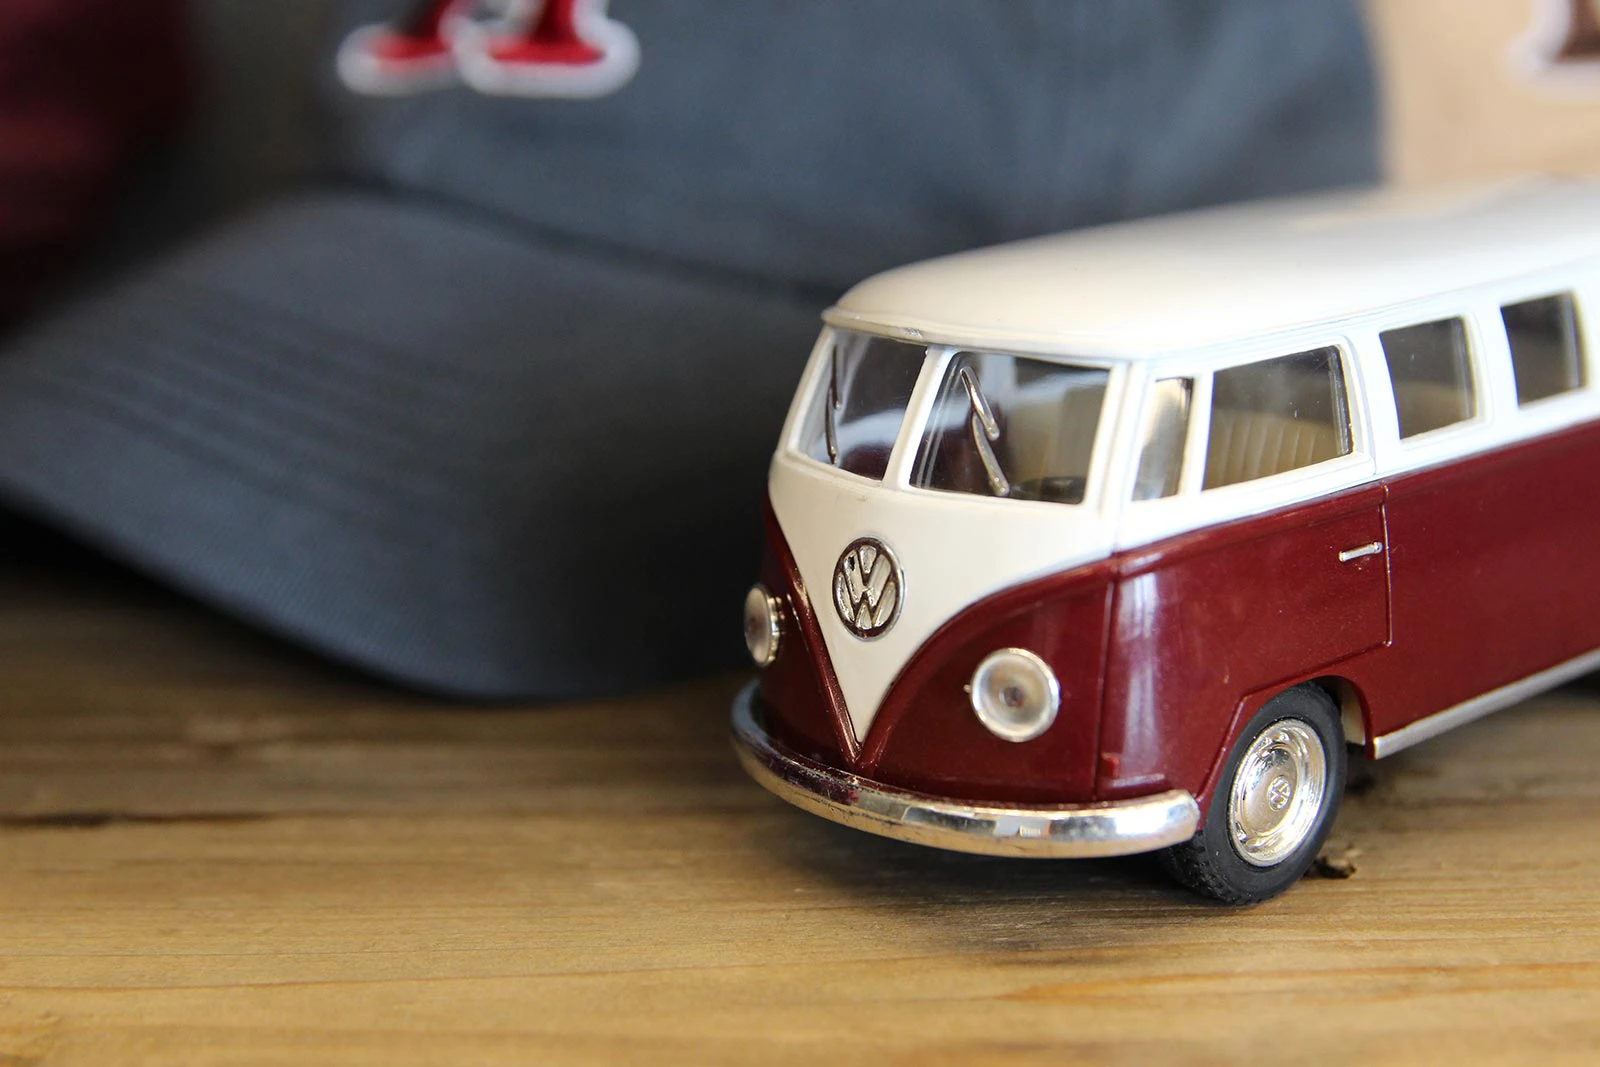 Volkswagon Bus toy next to a baseball cap